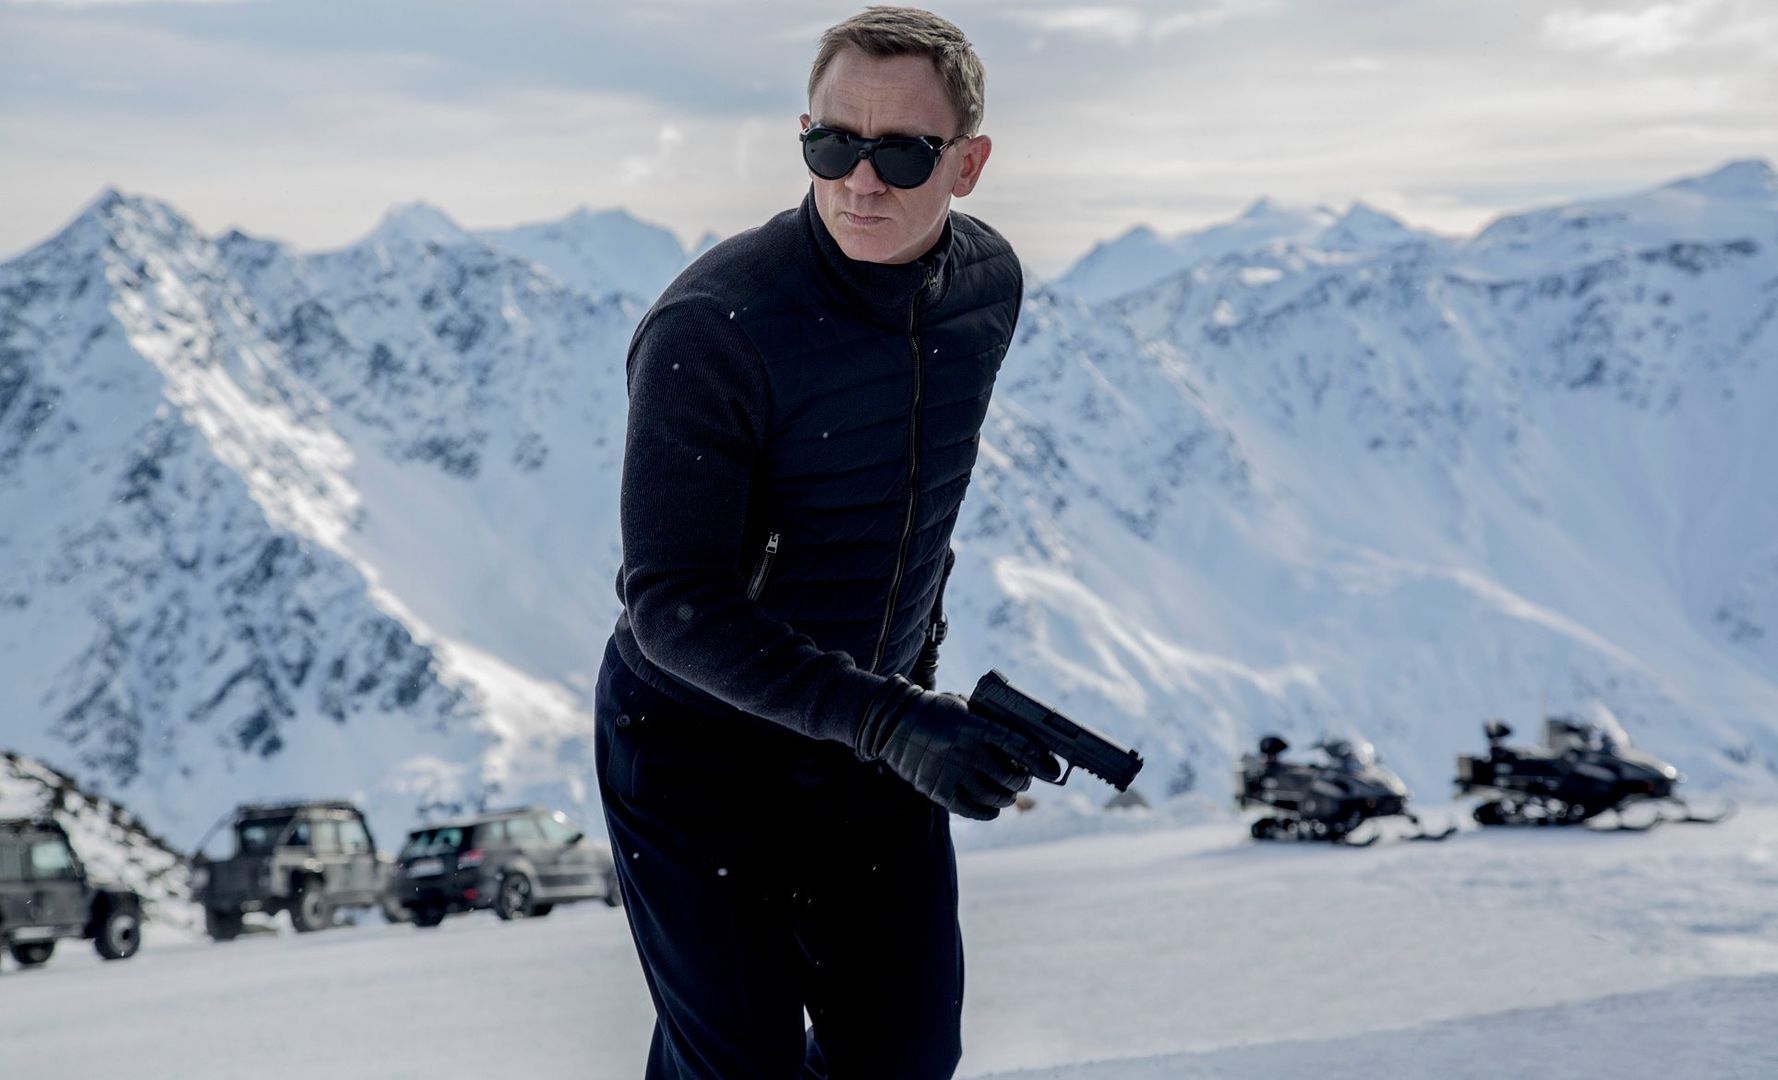 James Bond Spectre on the slopes